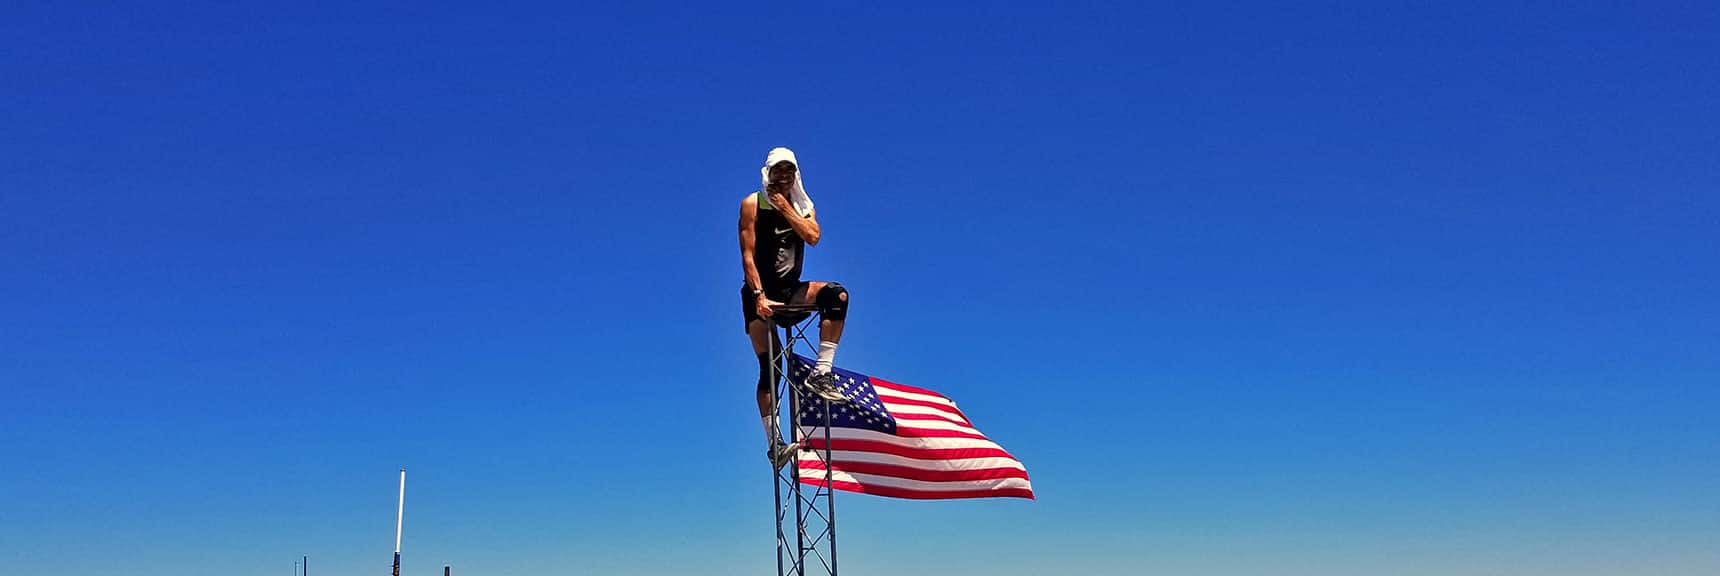 David Smith on Charleston Peak Summit | Griffith Peak & Charleston Peak Circuit Run, Spring Mountains, Nevada